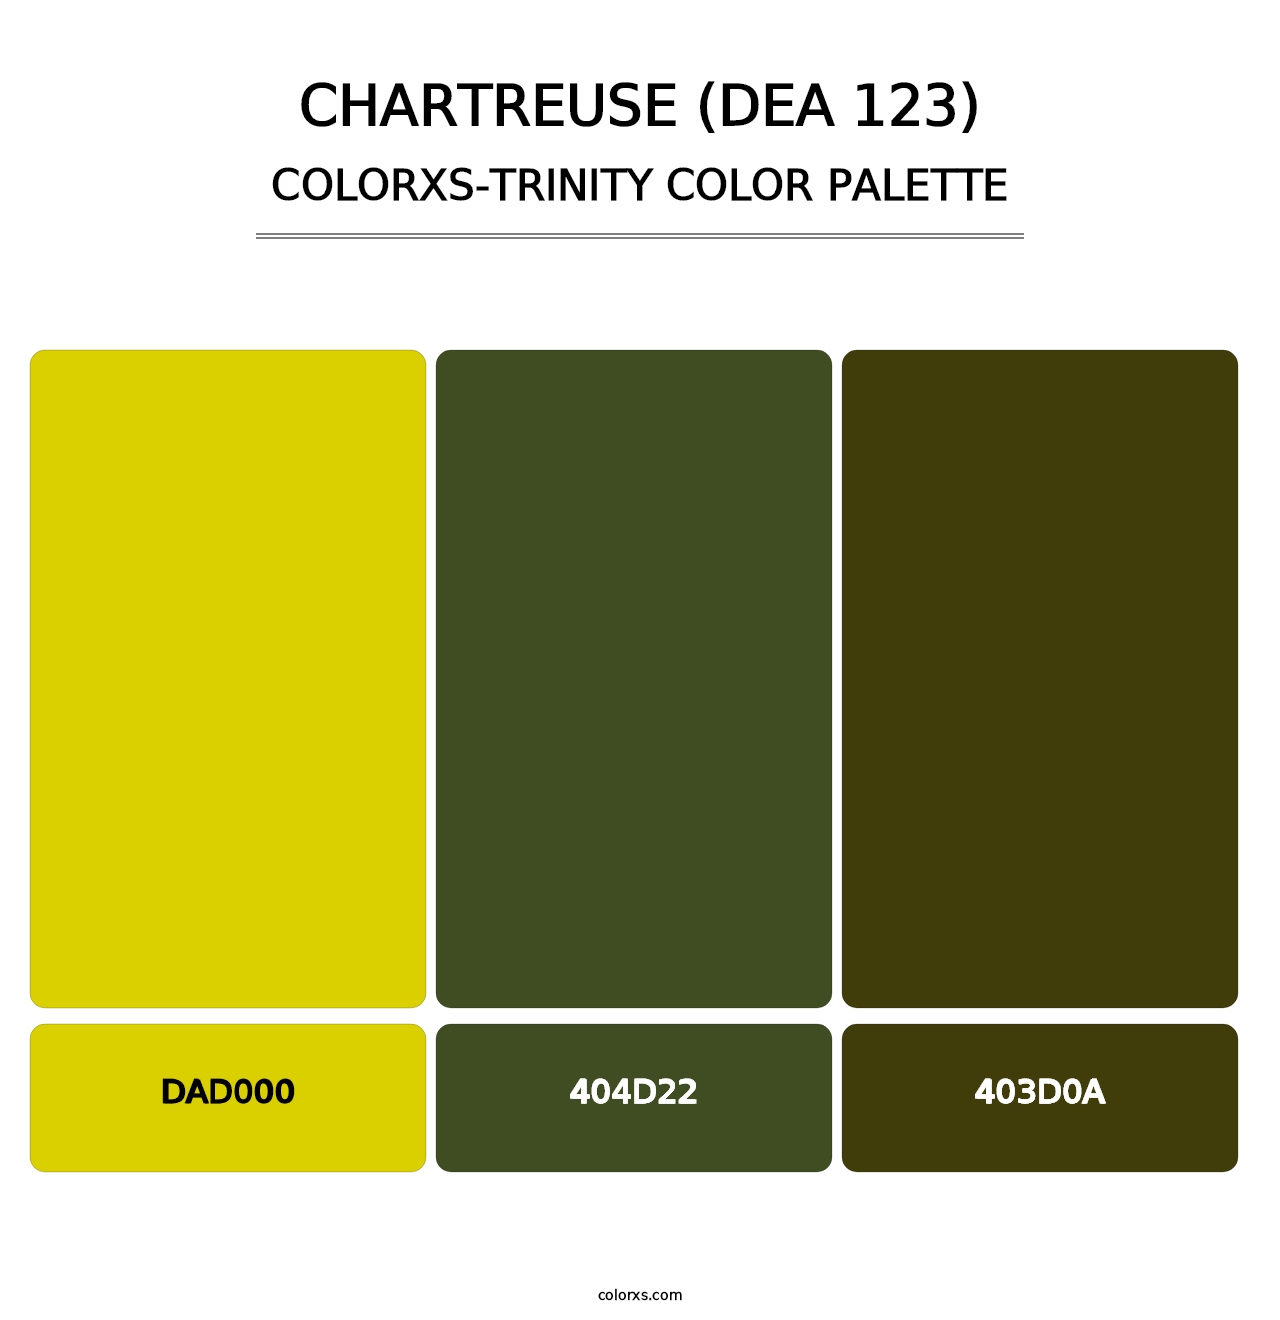 Chartreuse (DEA 123) - Colorxs Trinity Palette